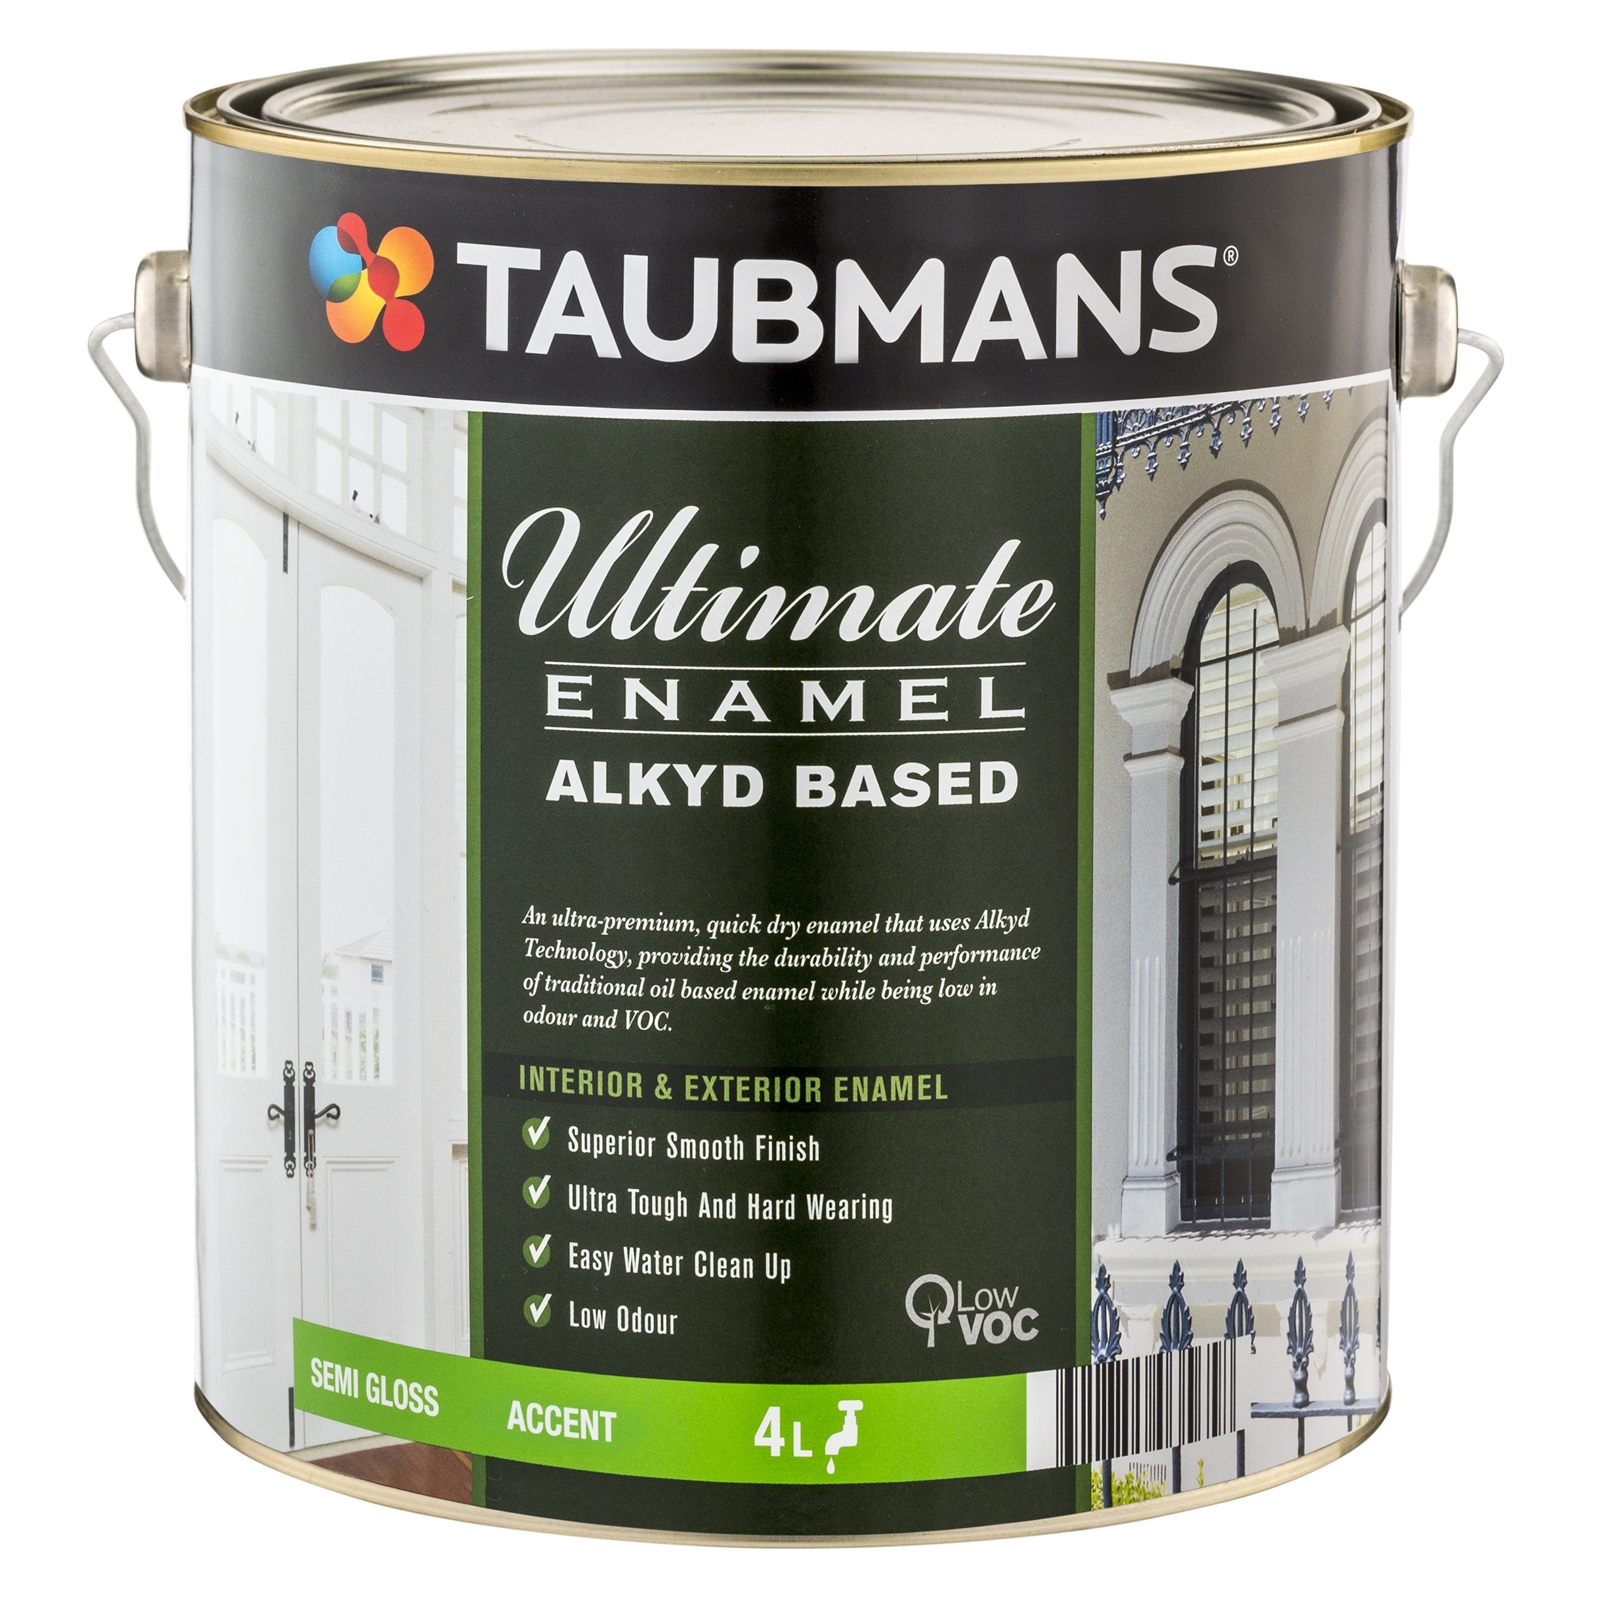 Taubmans Ultimate Enamel 4L Accent Semi Gloss Alkyd Based Enamel